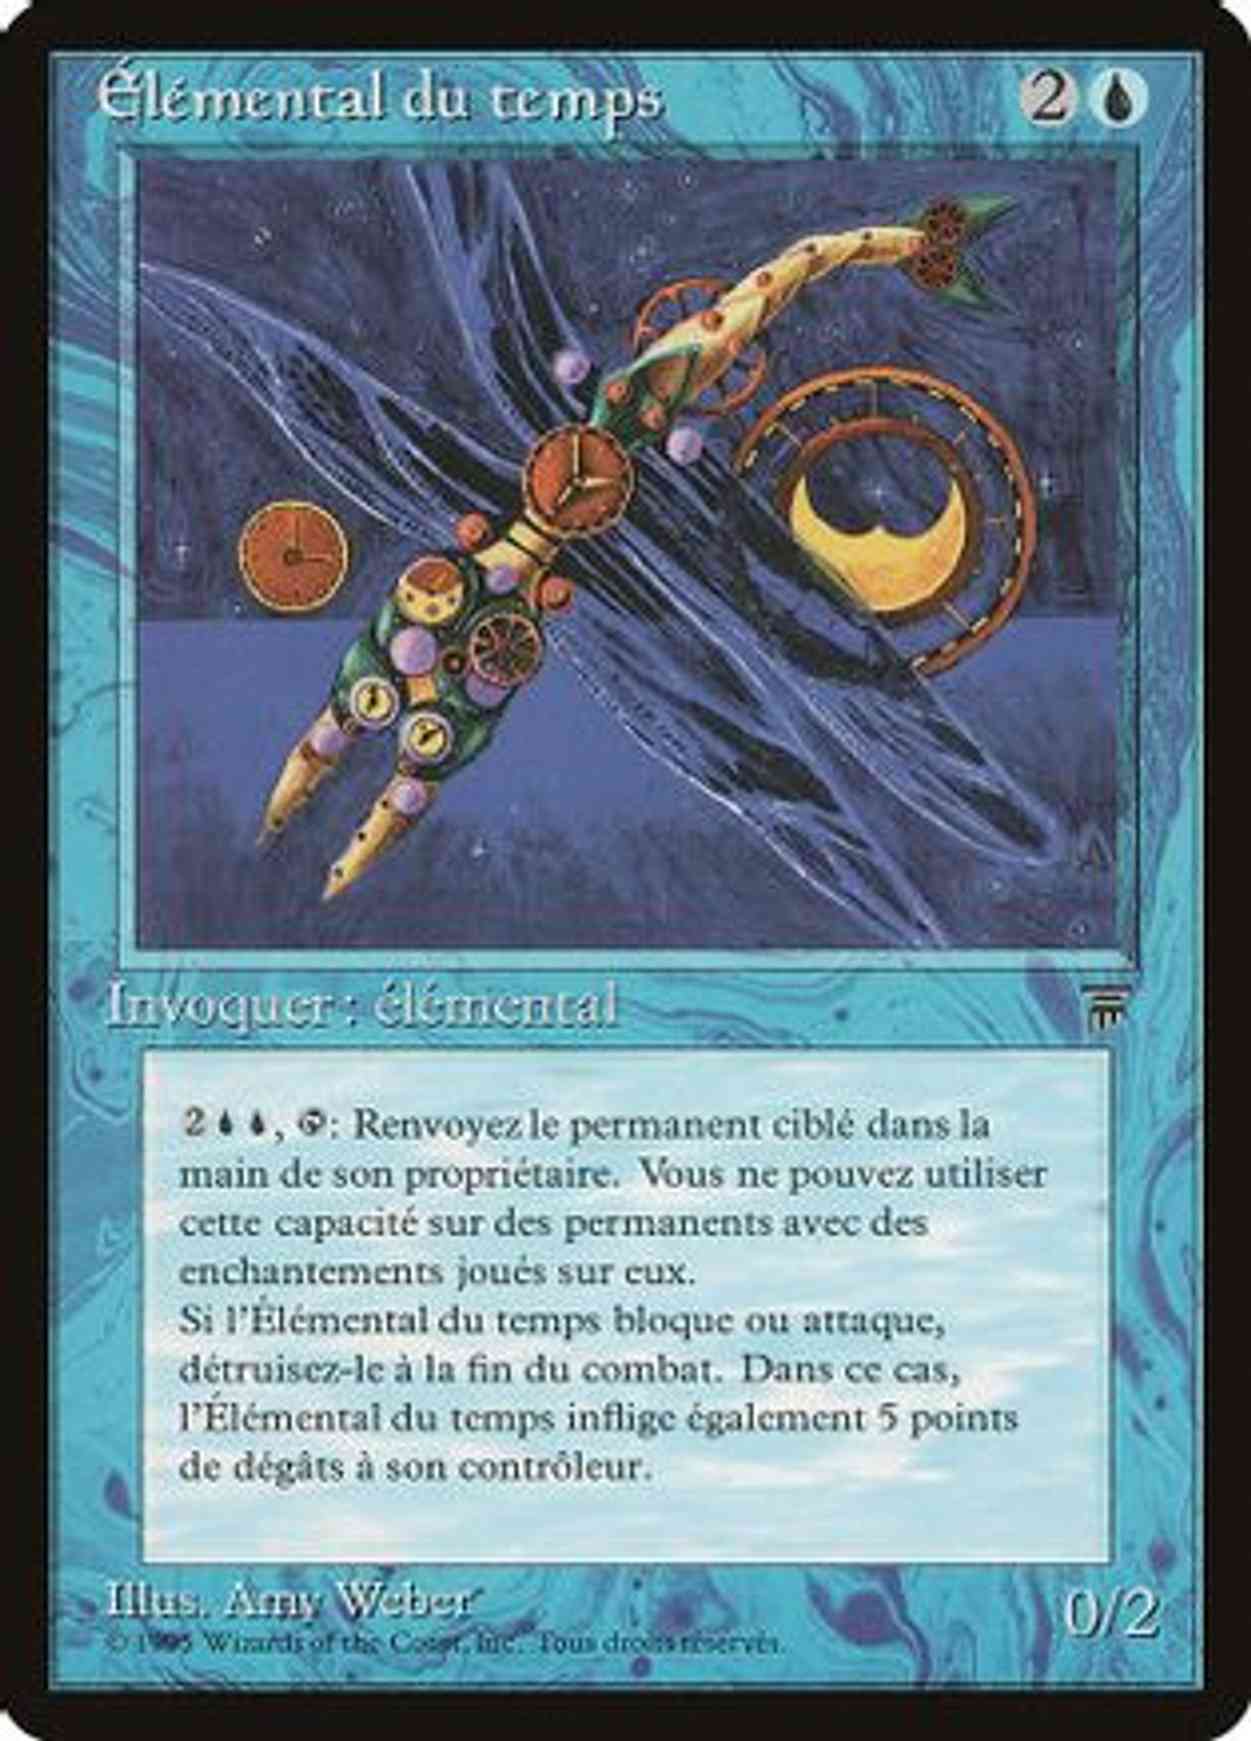 Time Elemental (French) - "Elemental du temps" magic card front